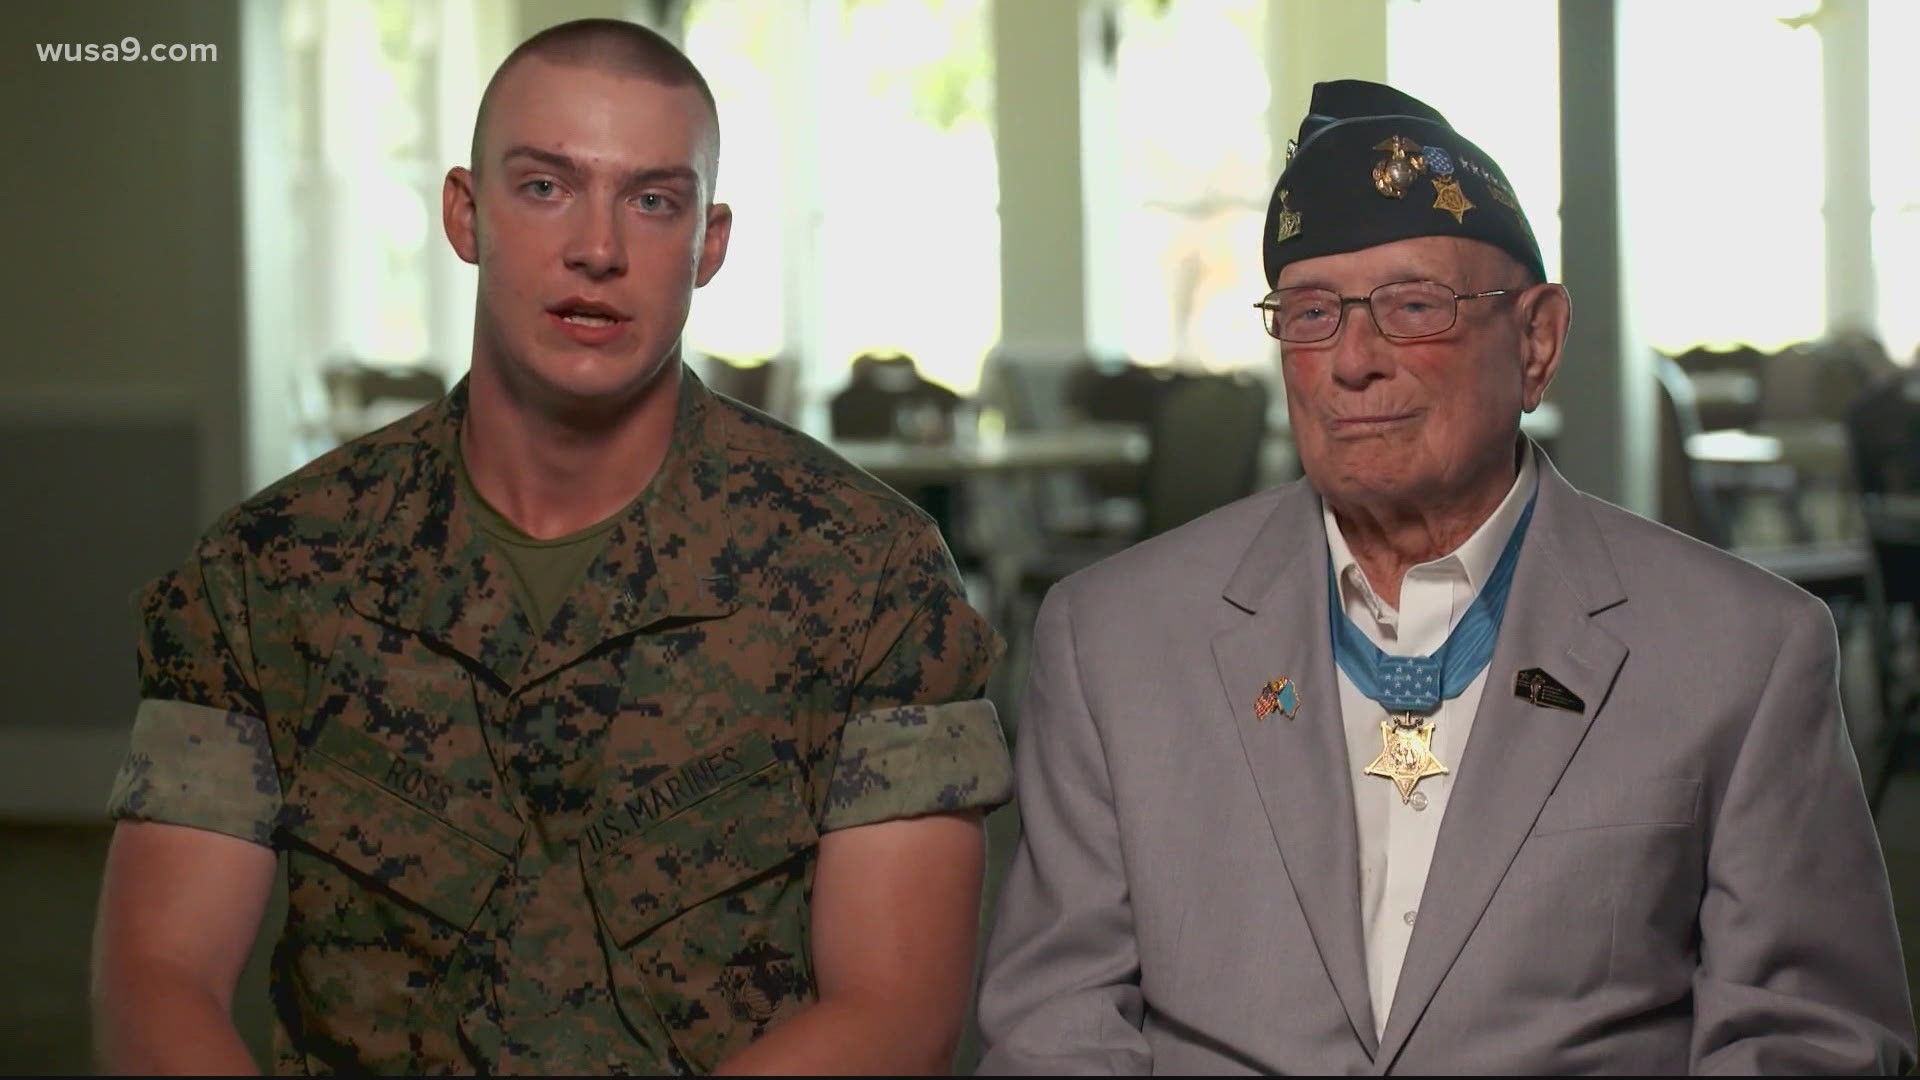 At 97, legendary Marine Hershel "Woody" Williams saw his great-grandson graduate